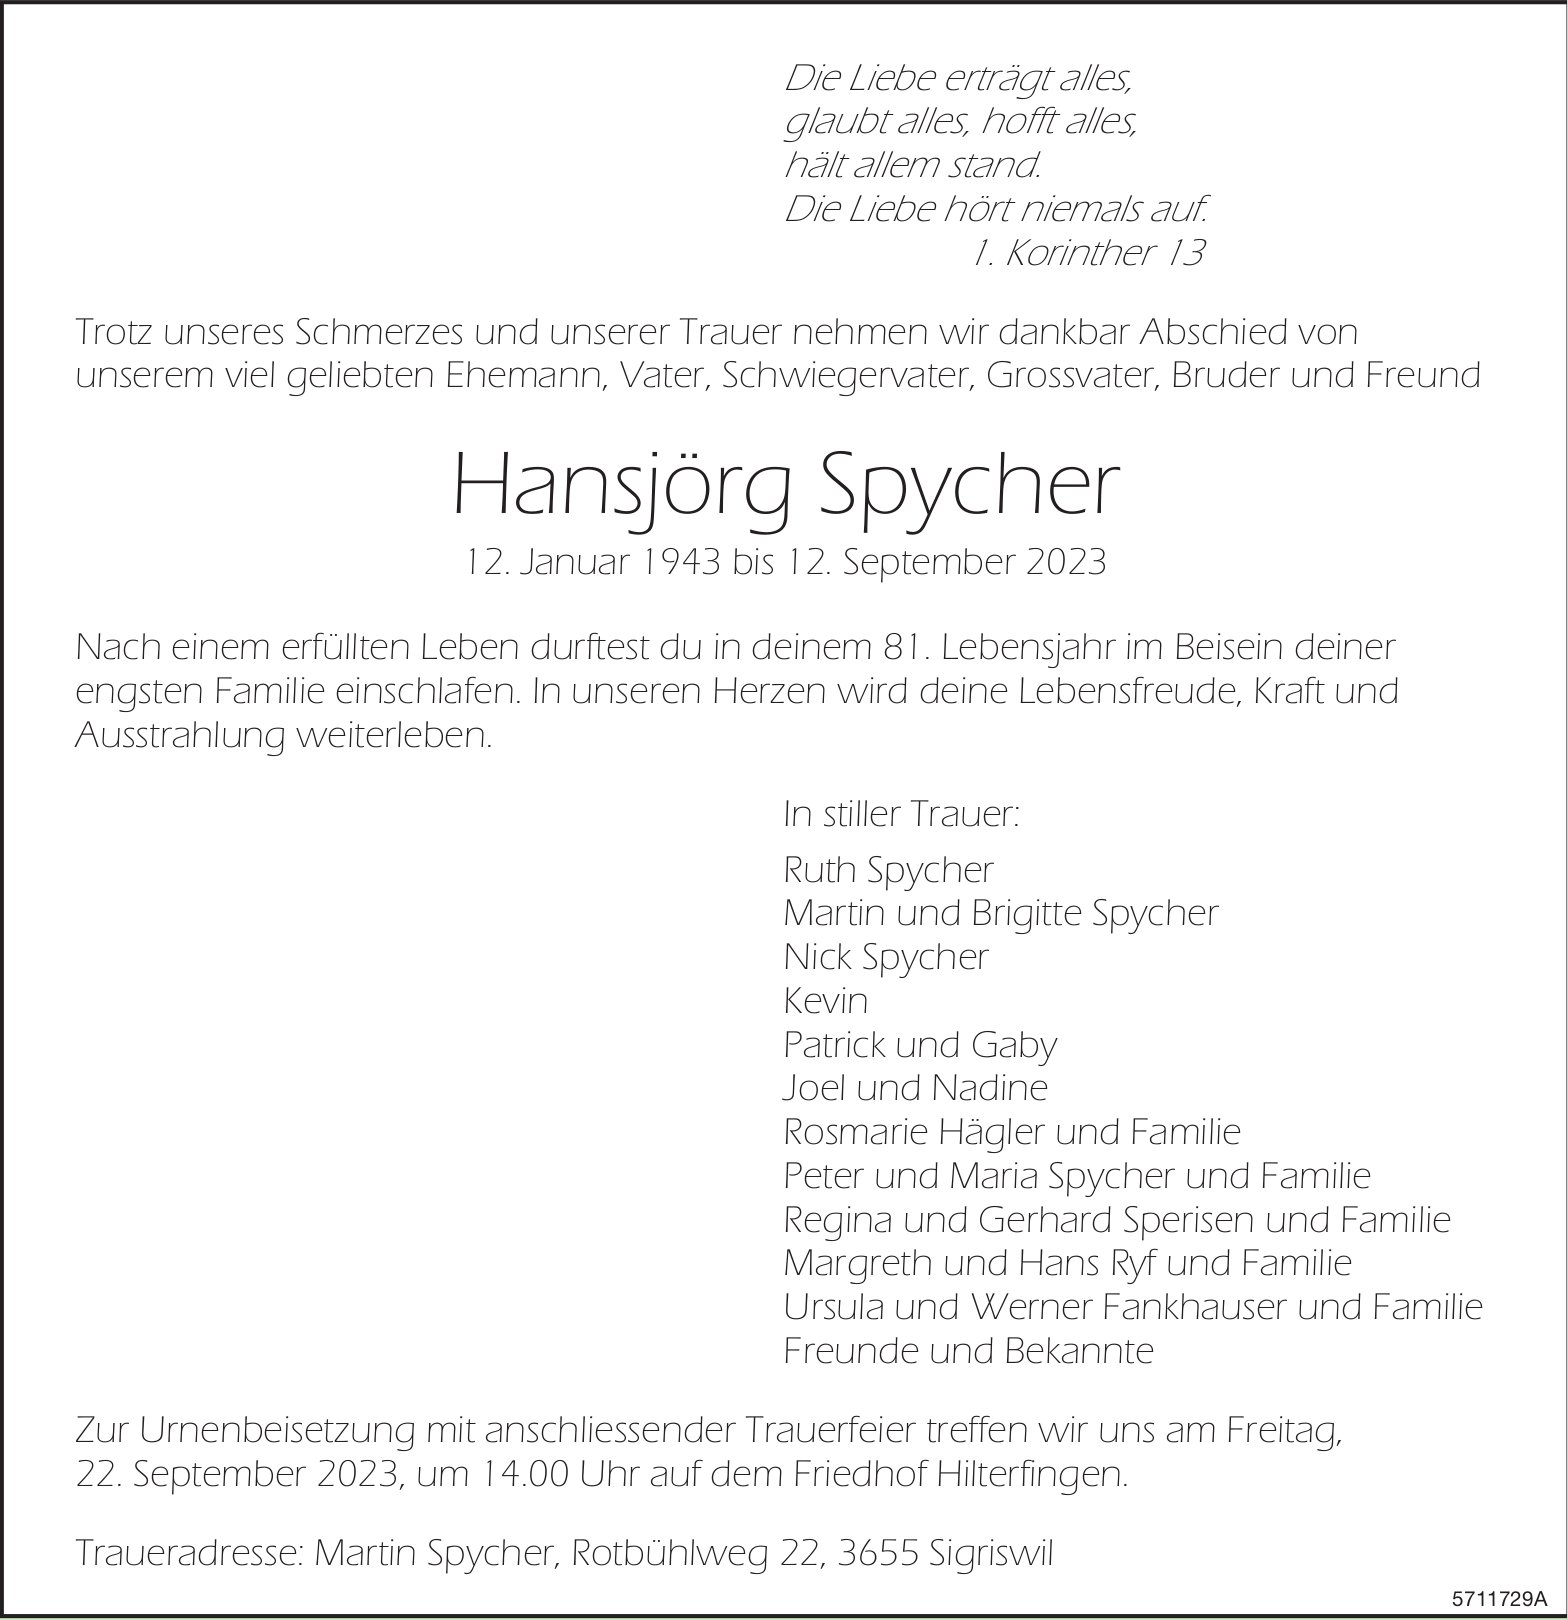 Spycher Hansjörg, September 2023 / TA